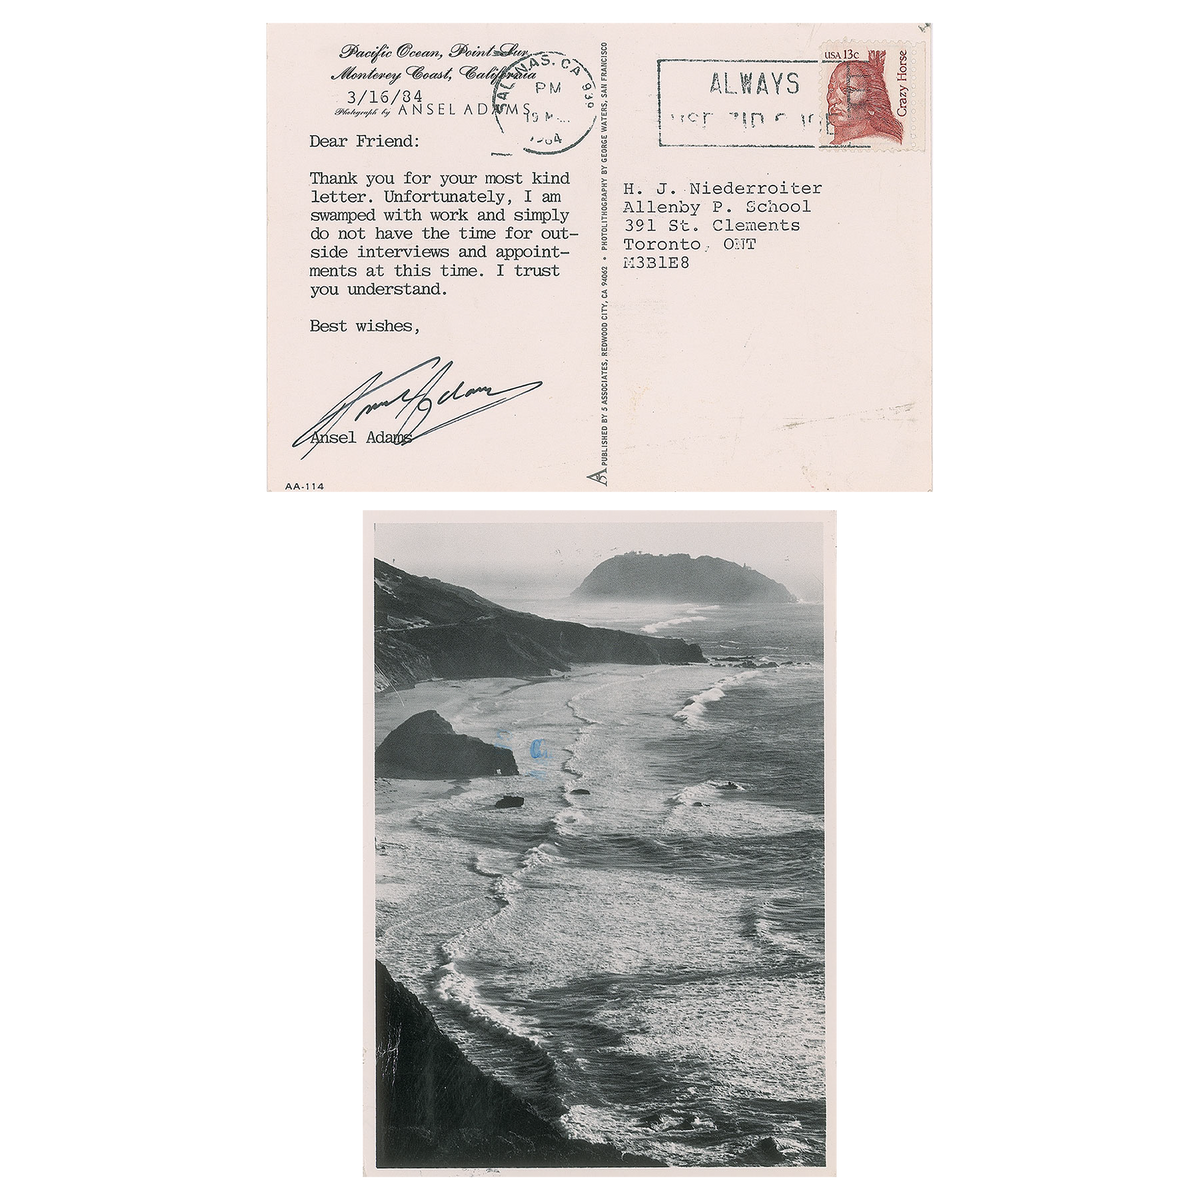 Ansel Adams - Signed Postcard - 1984